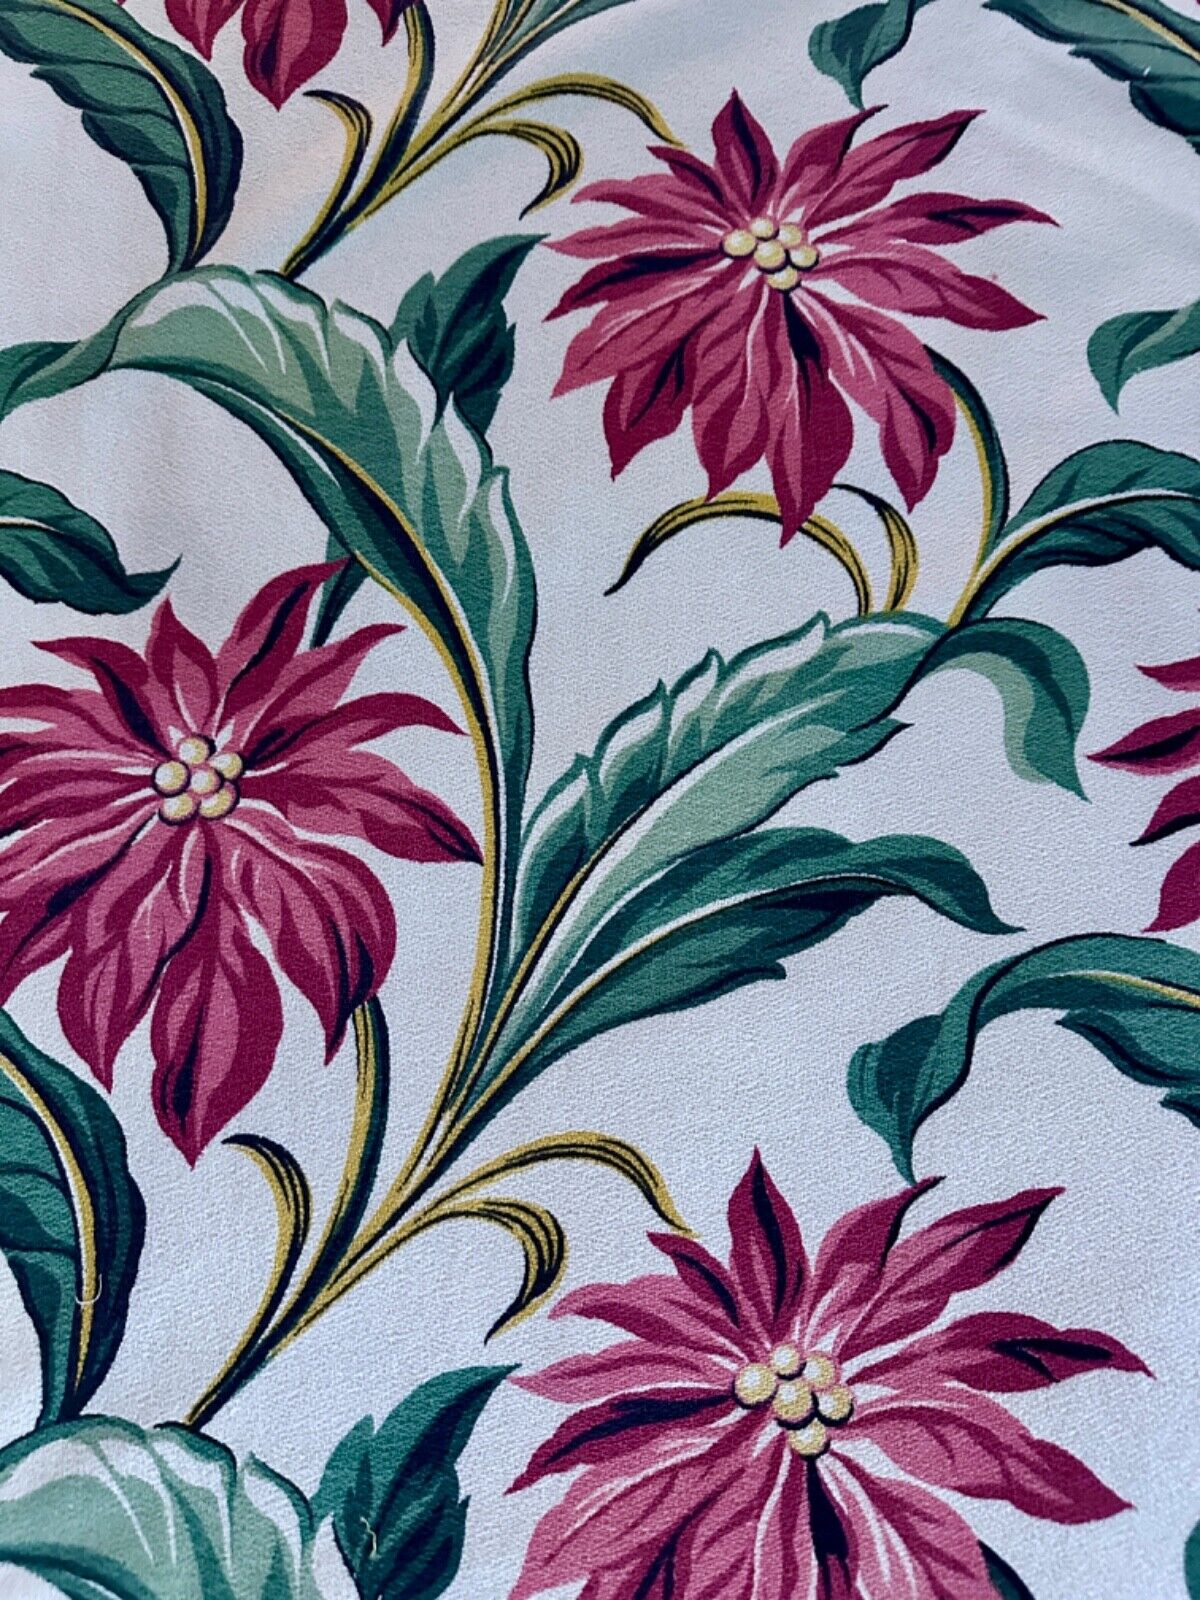 1930's Florida State Flower POINSETTIA Art Deco Barkcloth Vintage Fabric Pillows